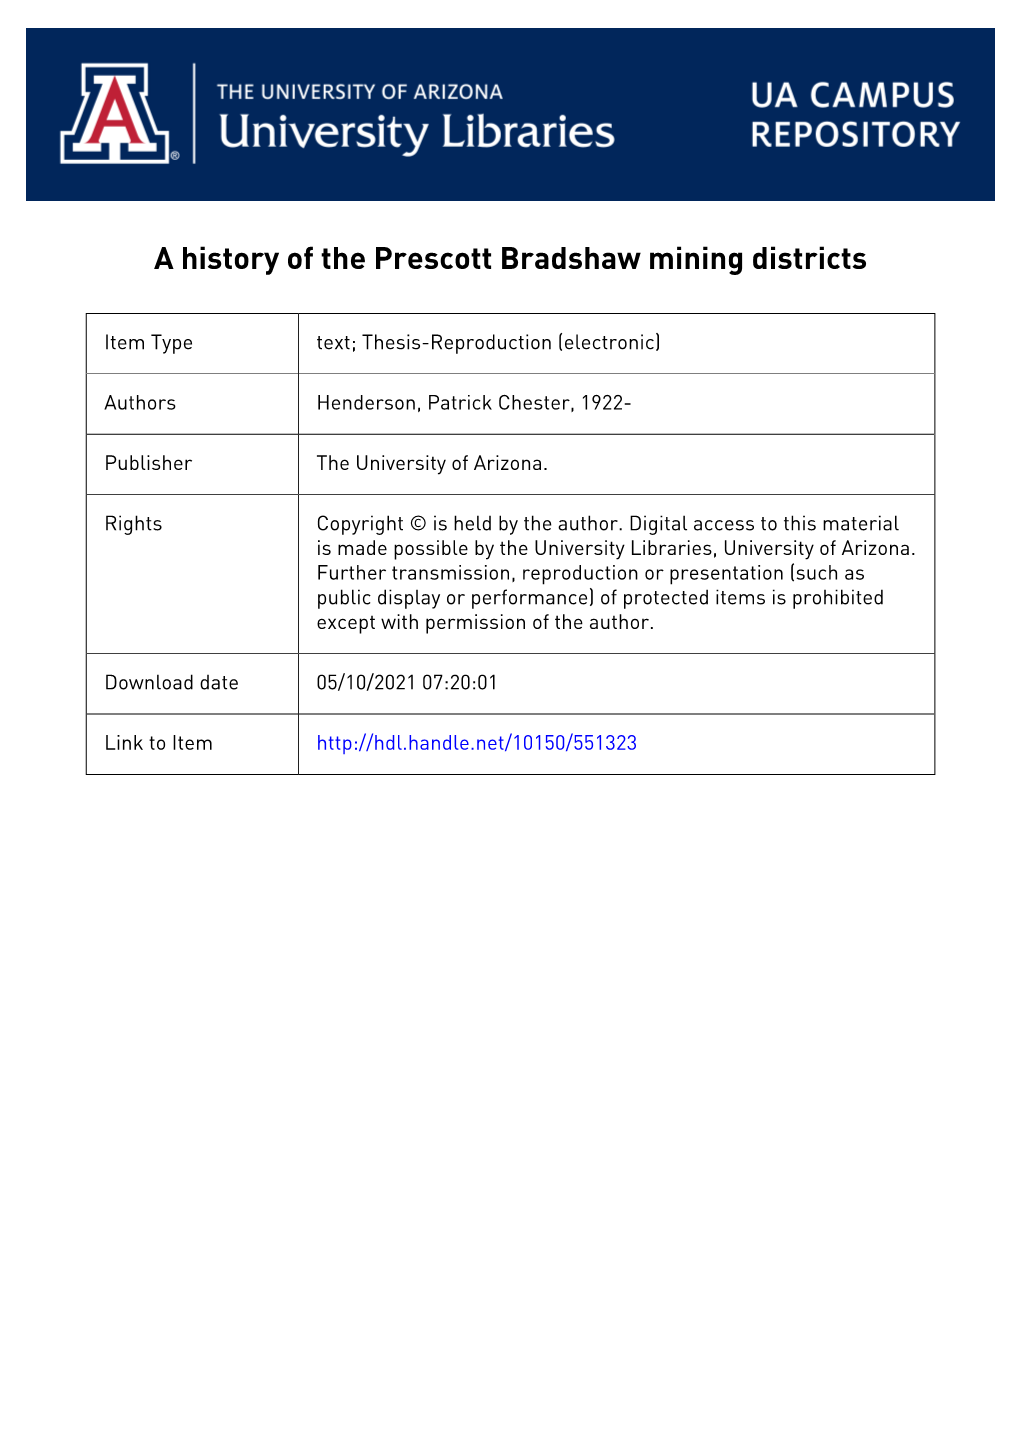 A HISTORY of the PRESCOTT BRADSHAW MINING DISTRICTS Xv